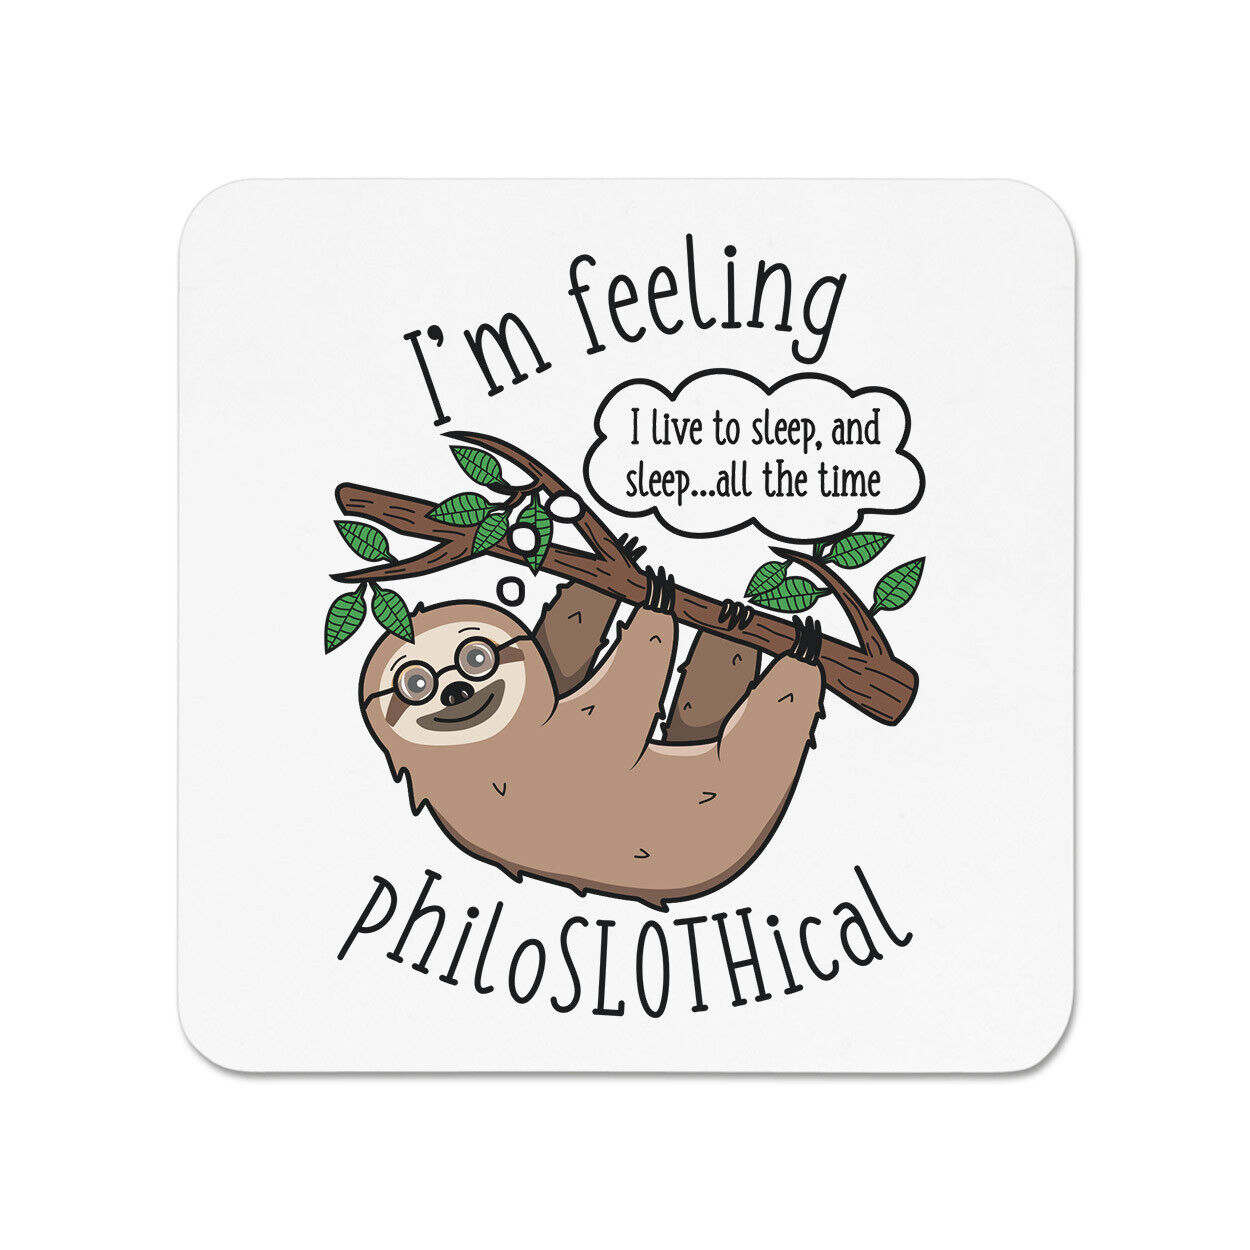 Feeling Philoslothical Sloth Fridge Magnet Sloth Joke Funny Animal Pun  5057698288499 | eBay